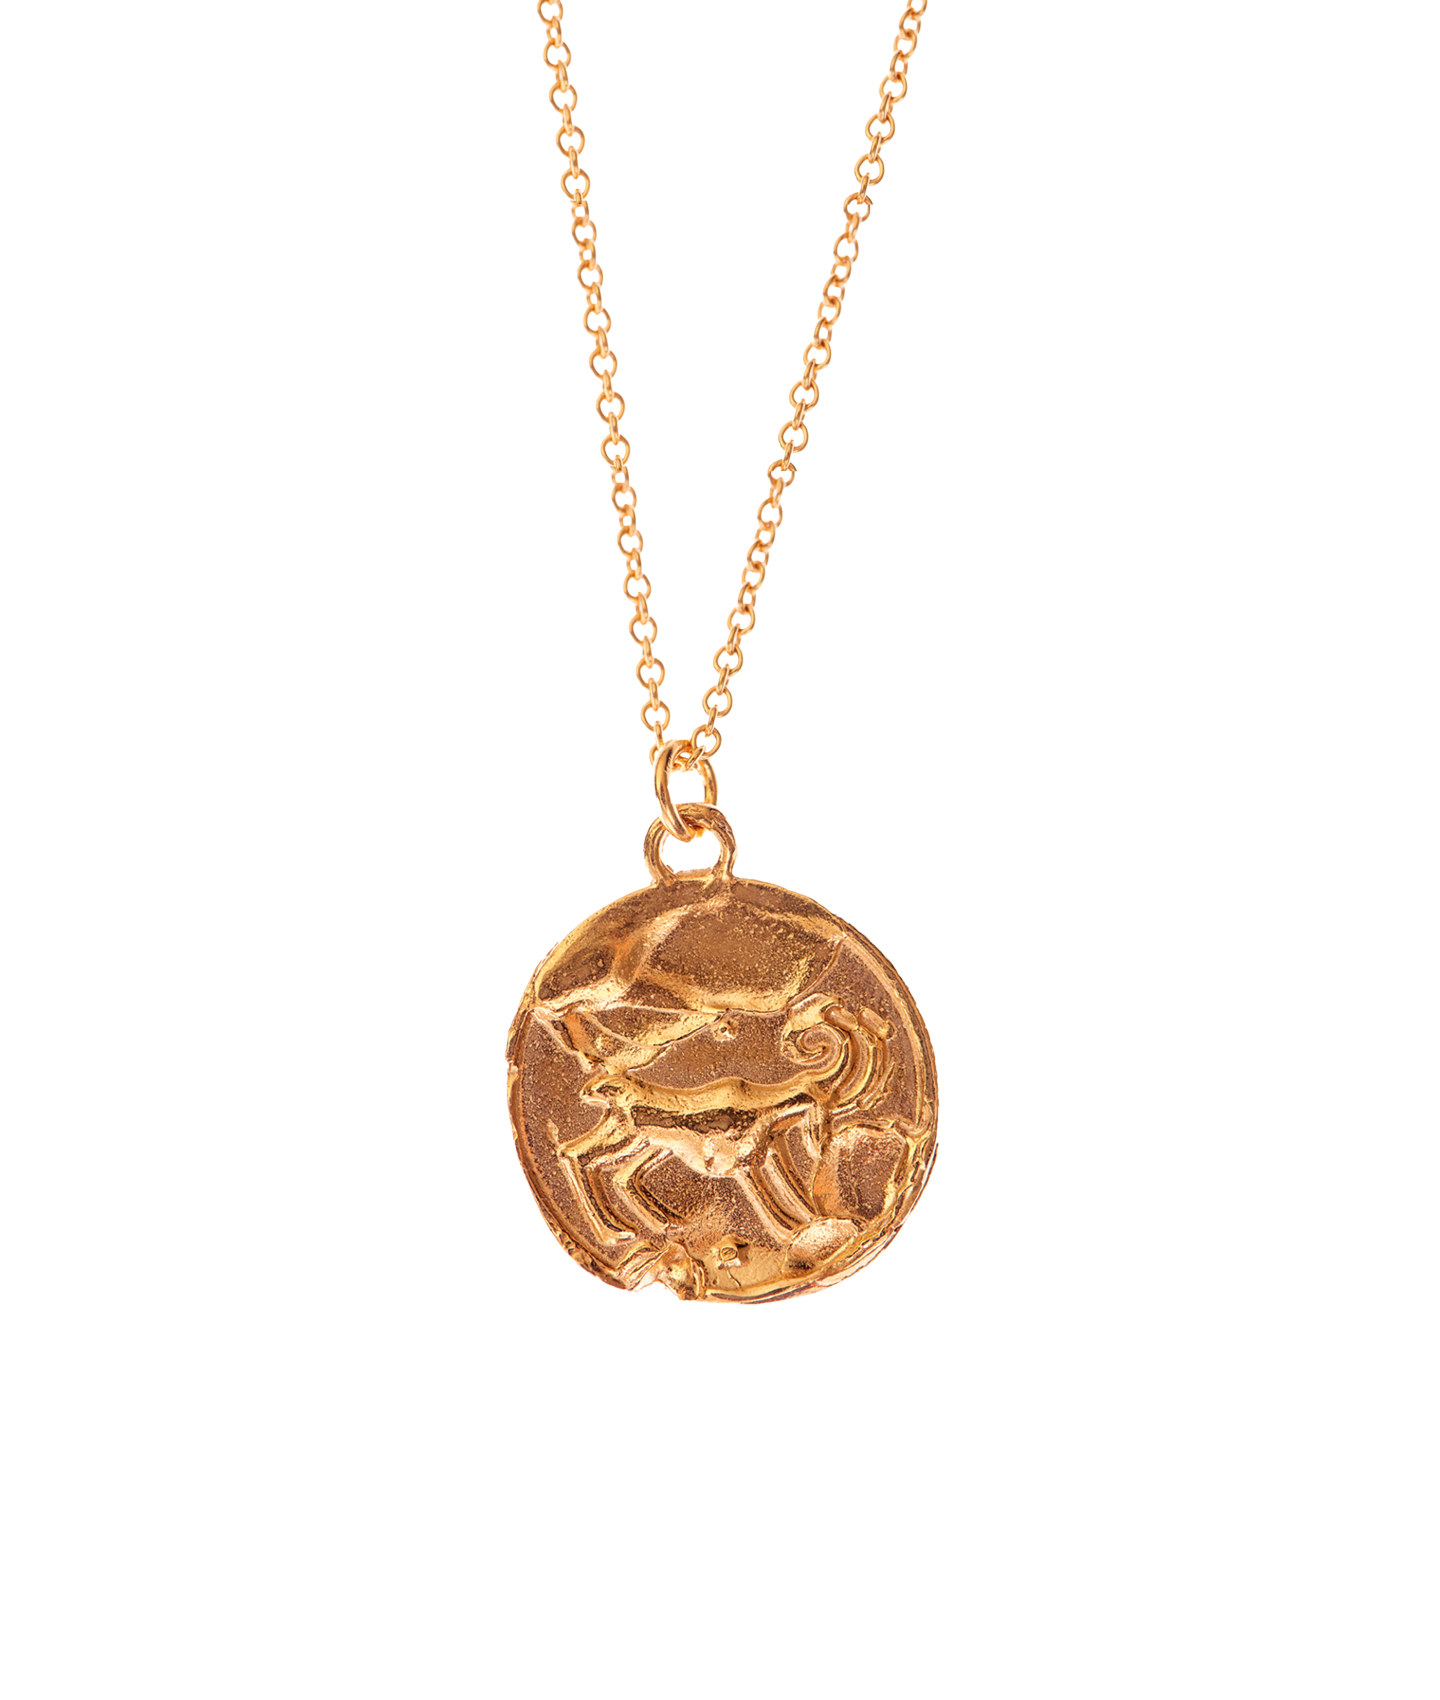 The Aries Medallion